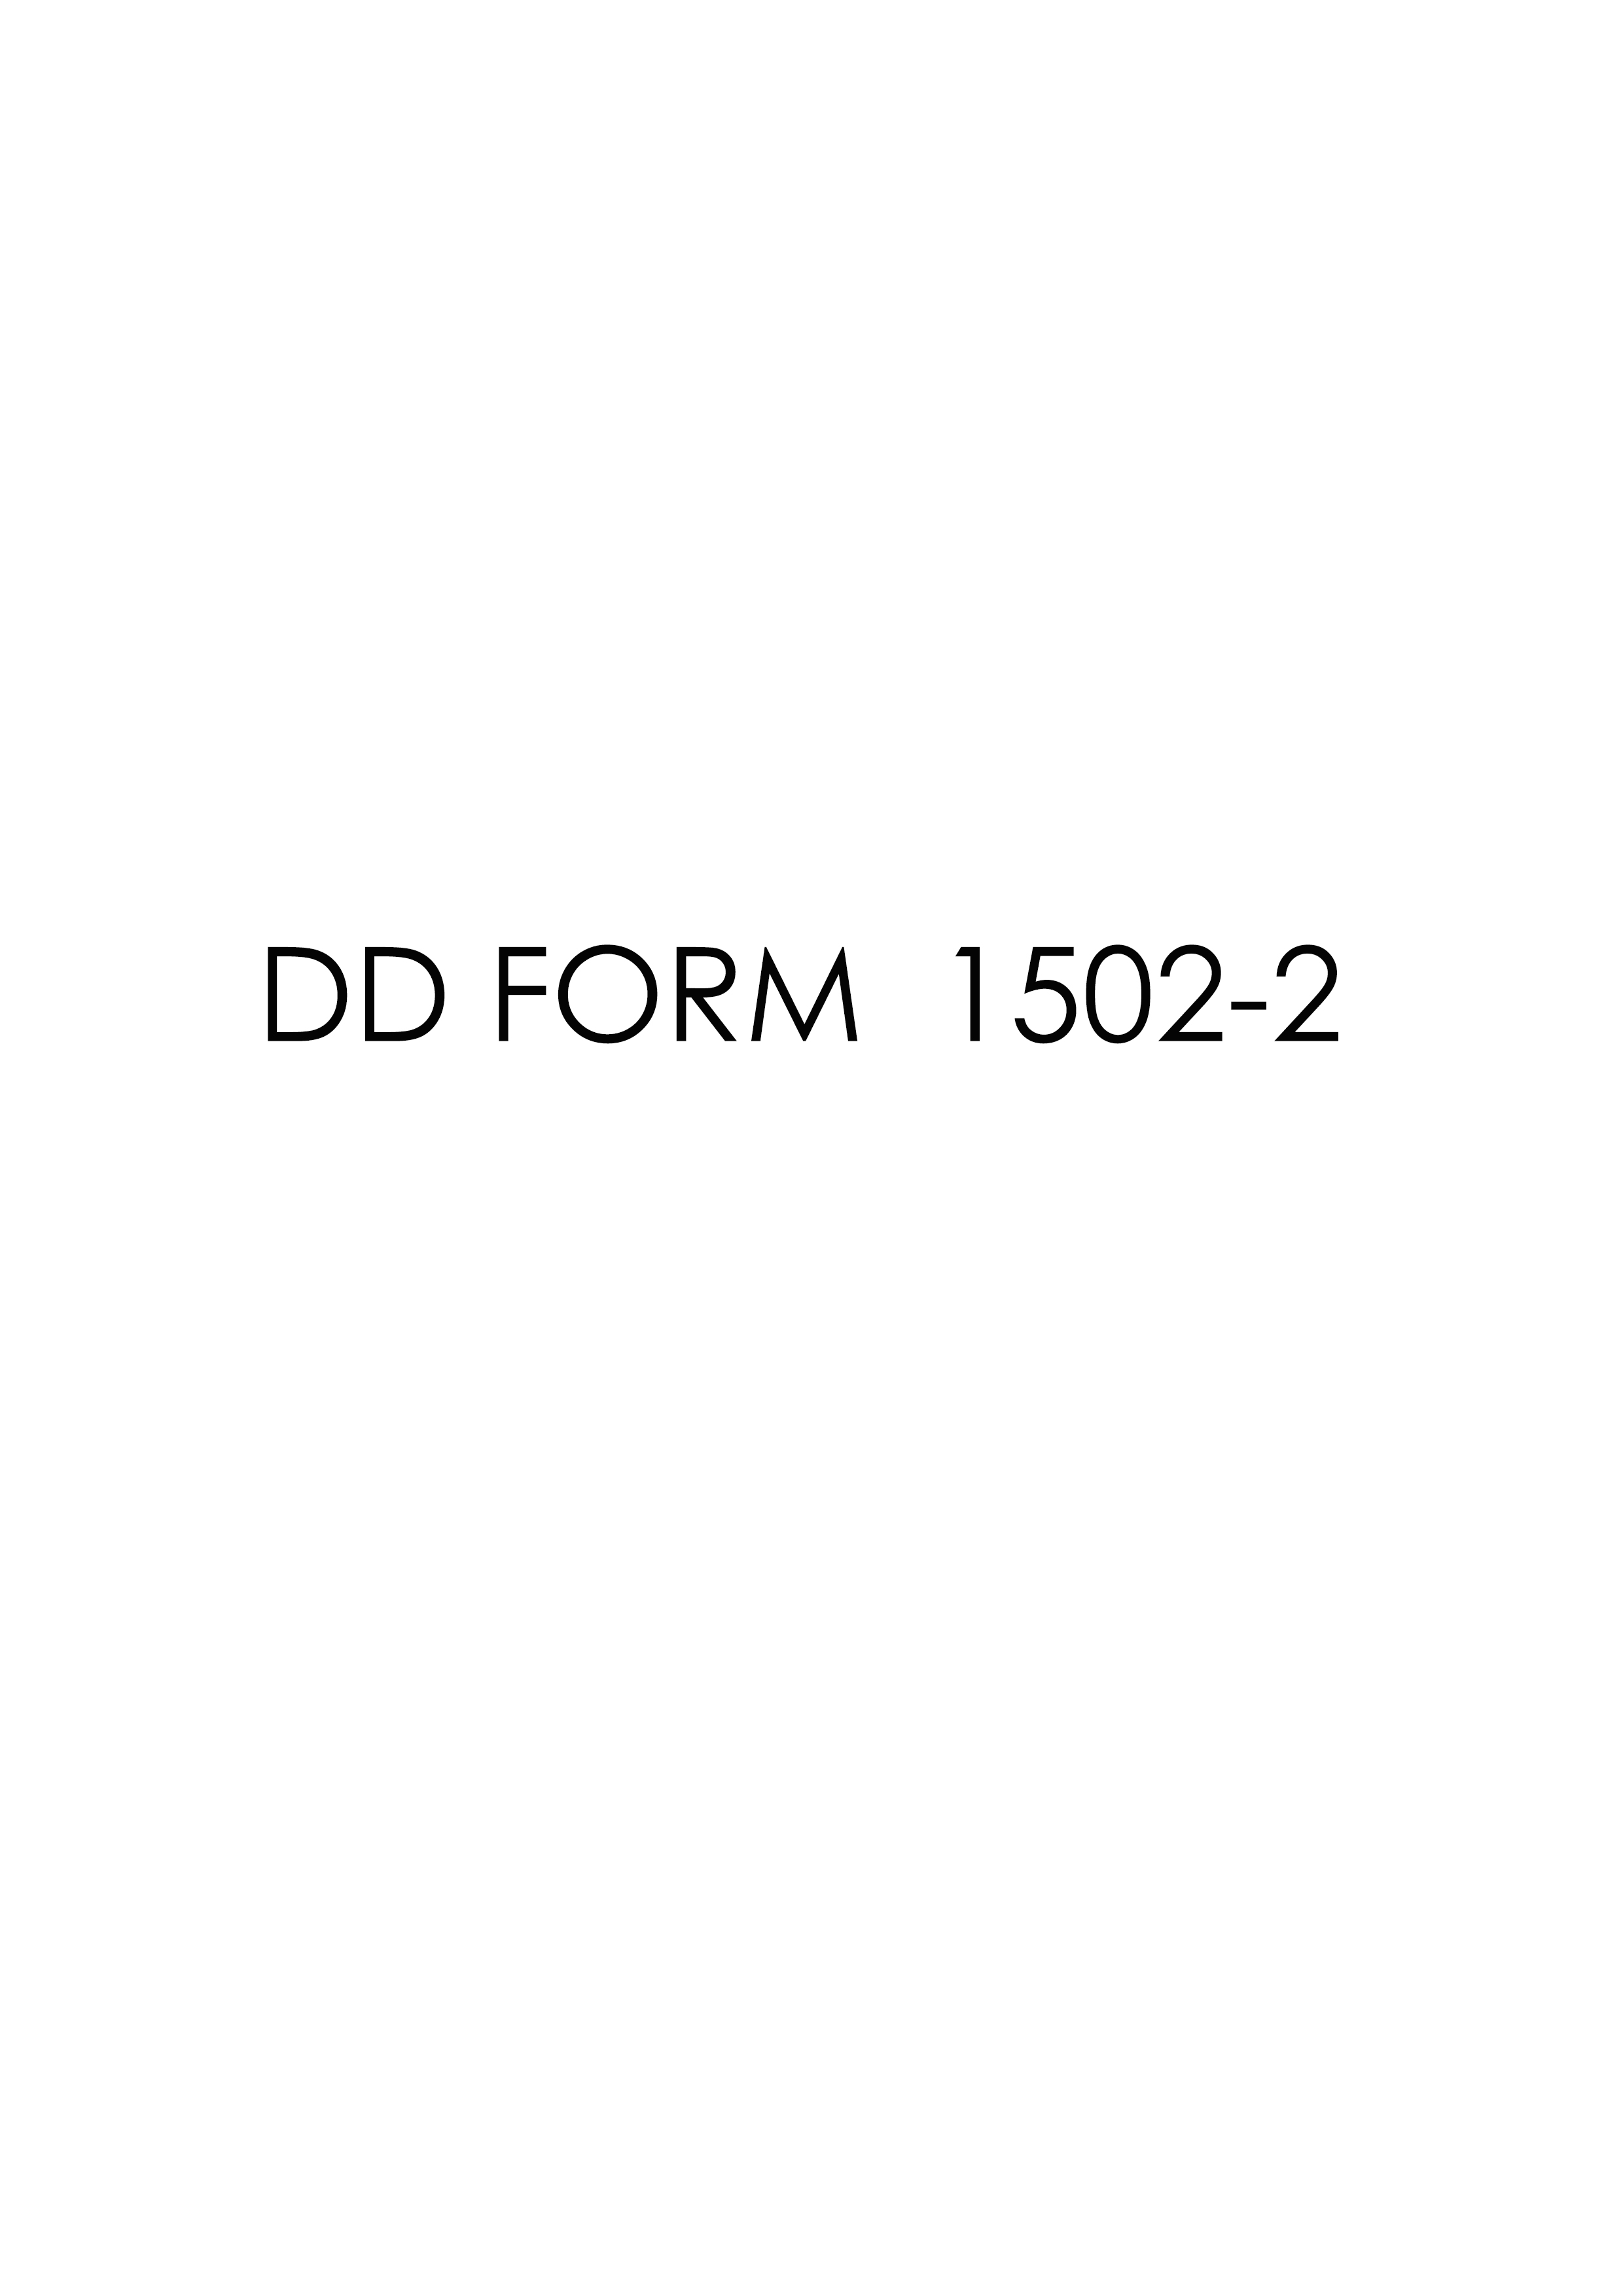 Download dd form 1502-2